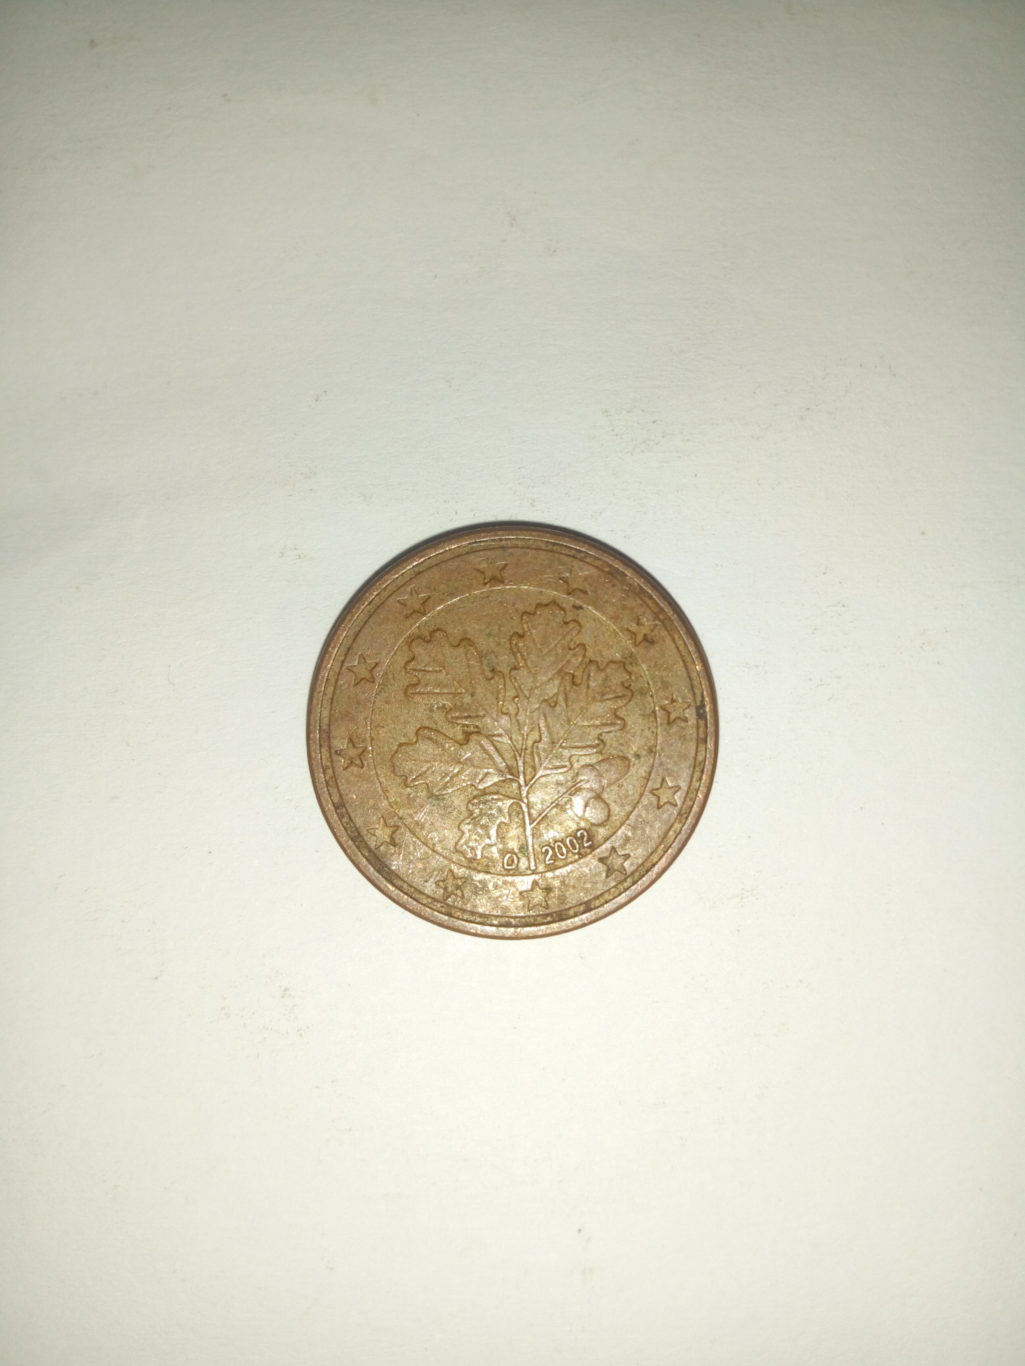 2002_50 cent